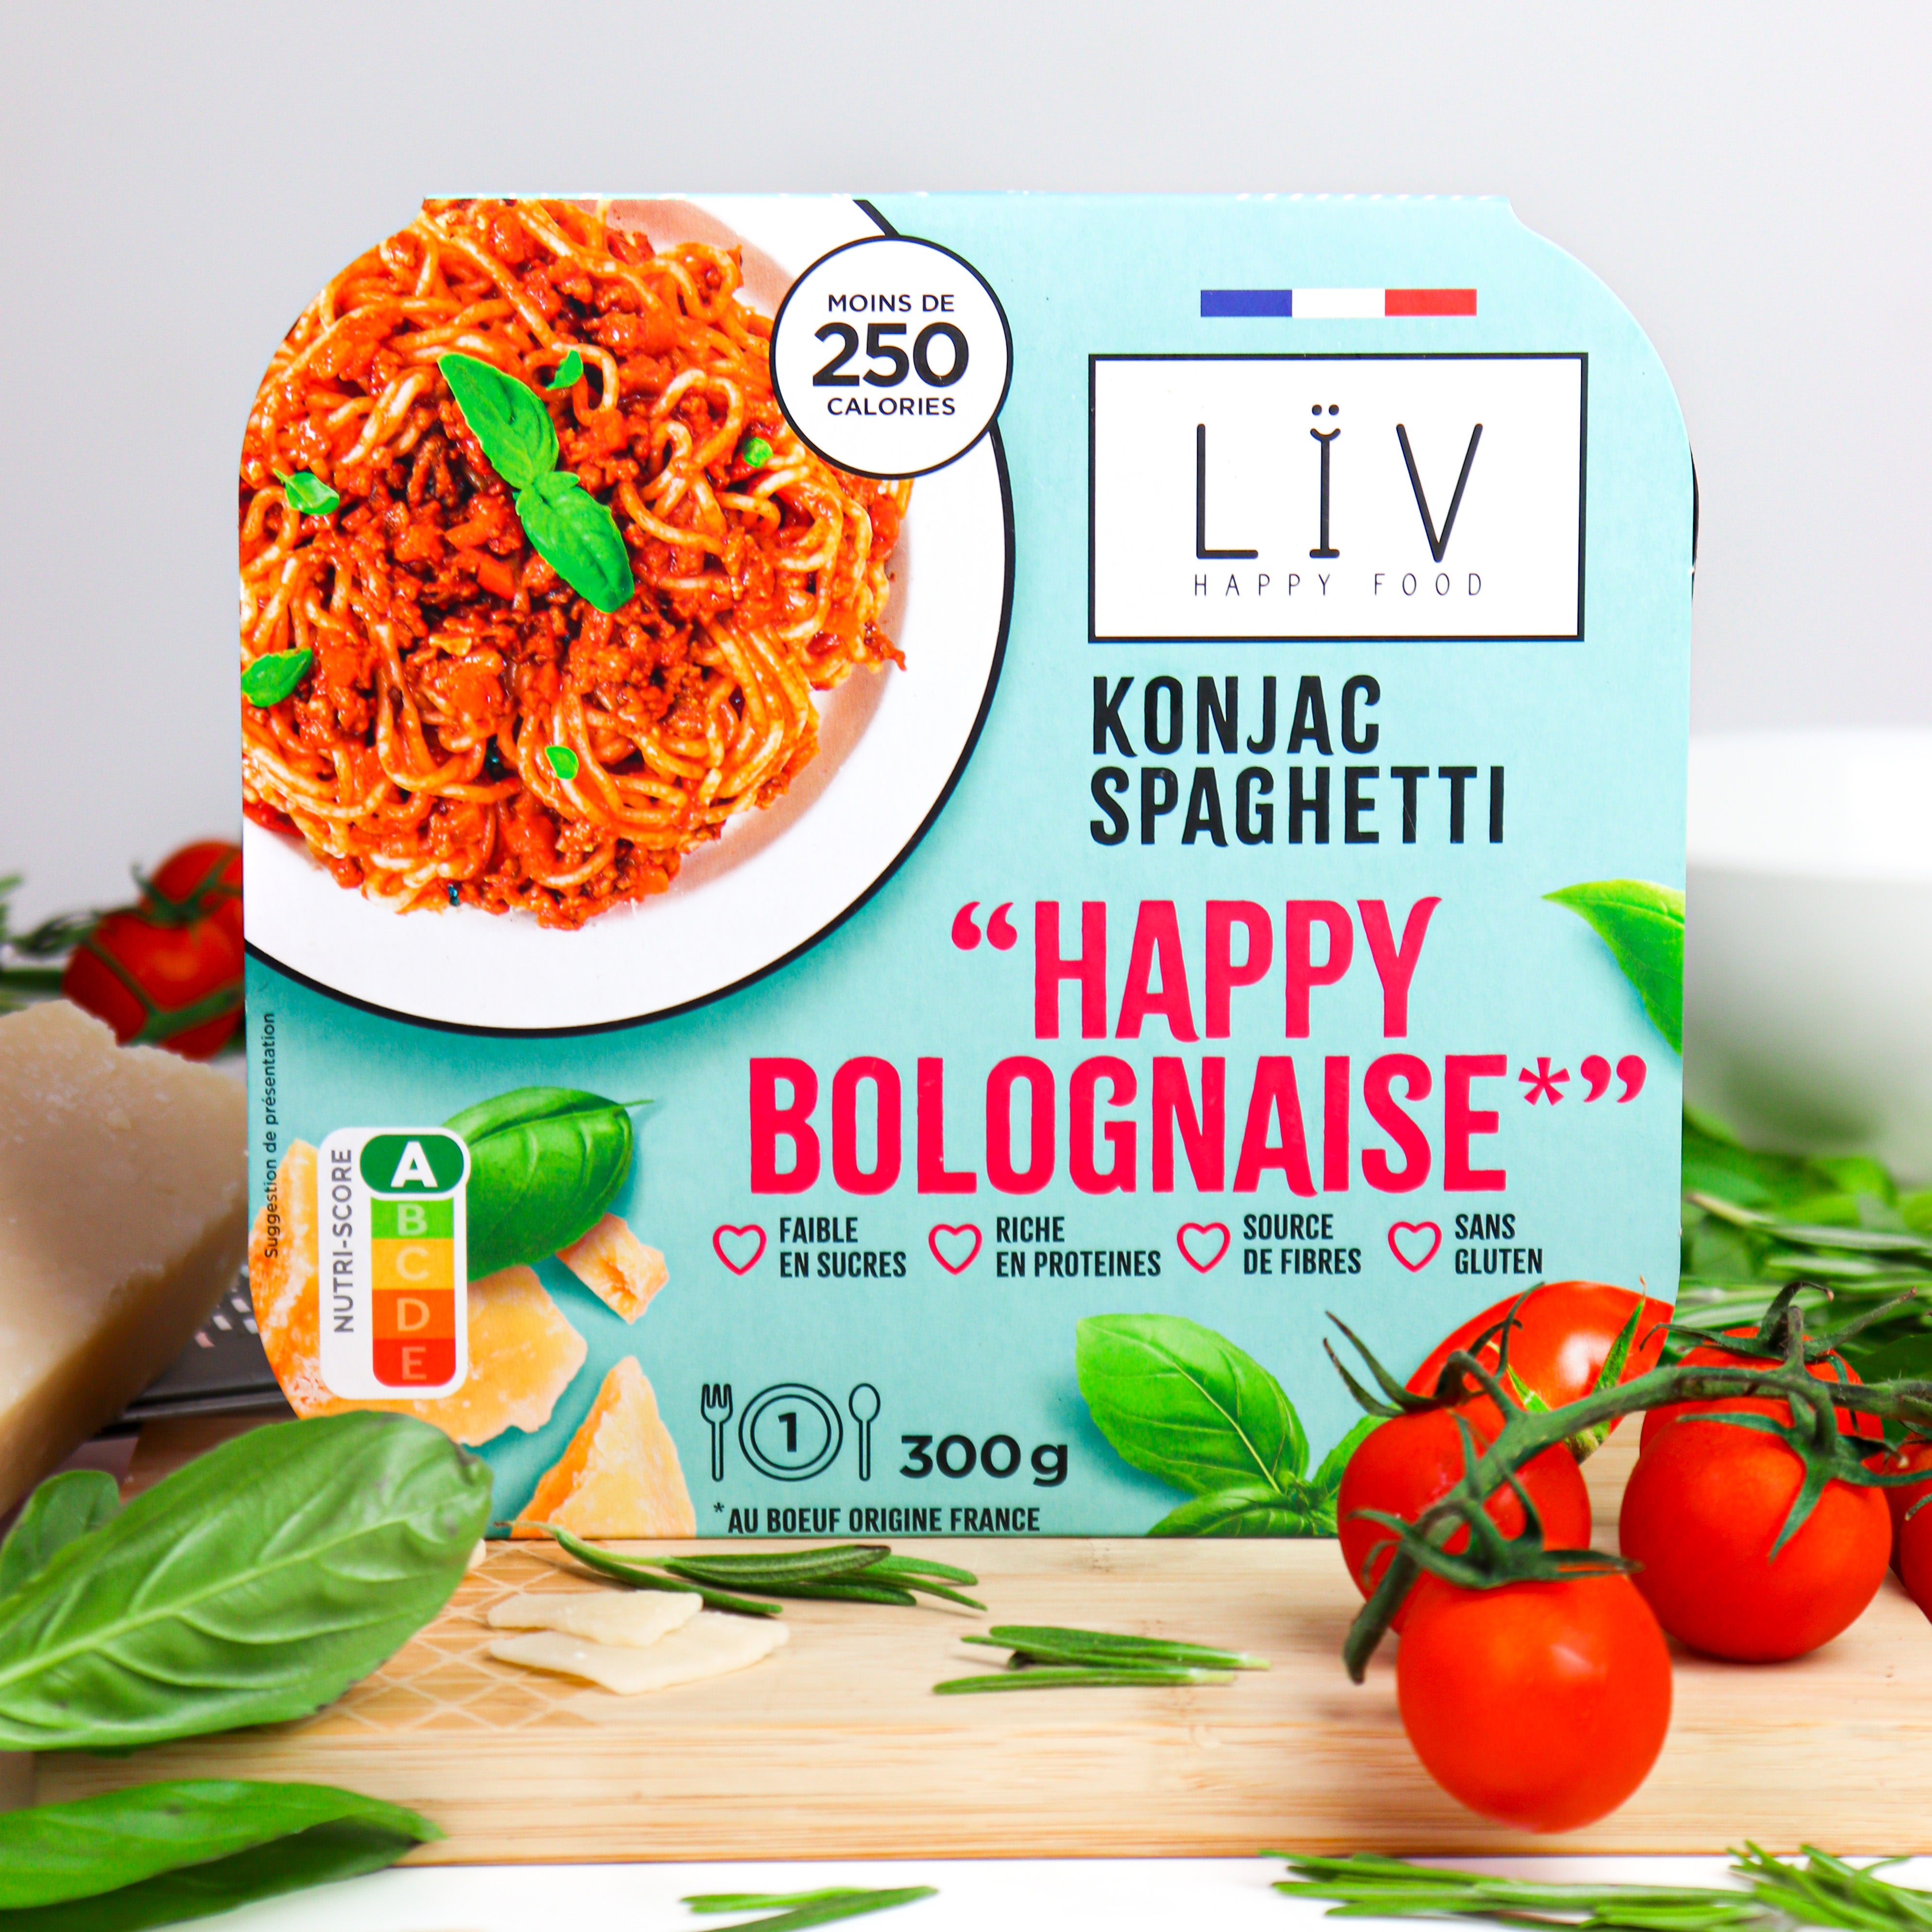 Spaghetti de konjac 6x200g - LIV Happy Food